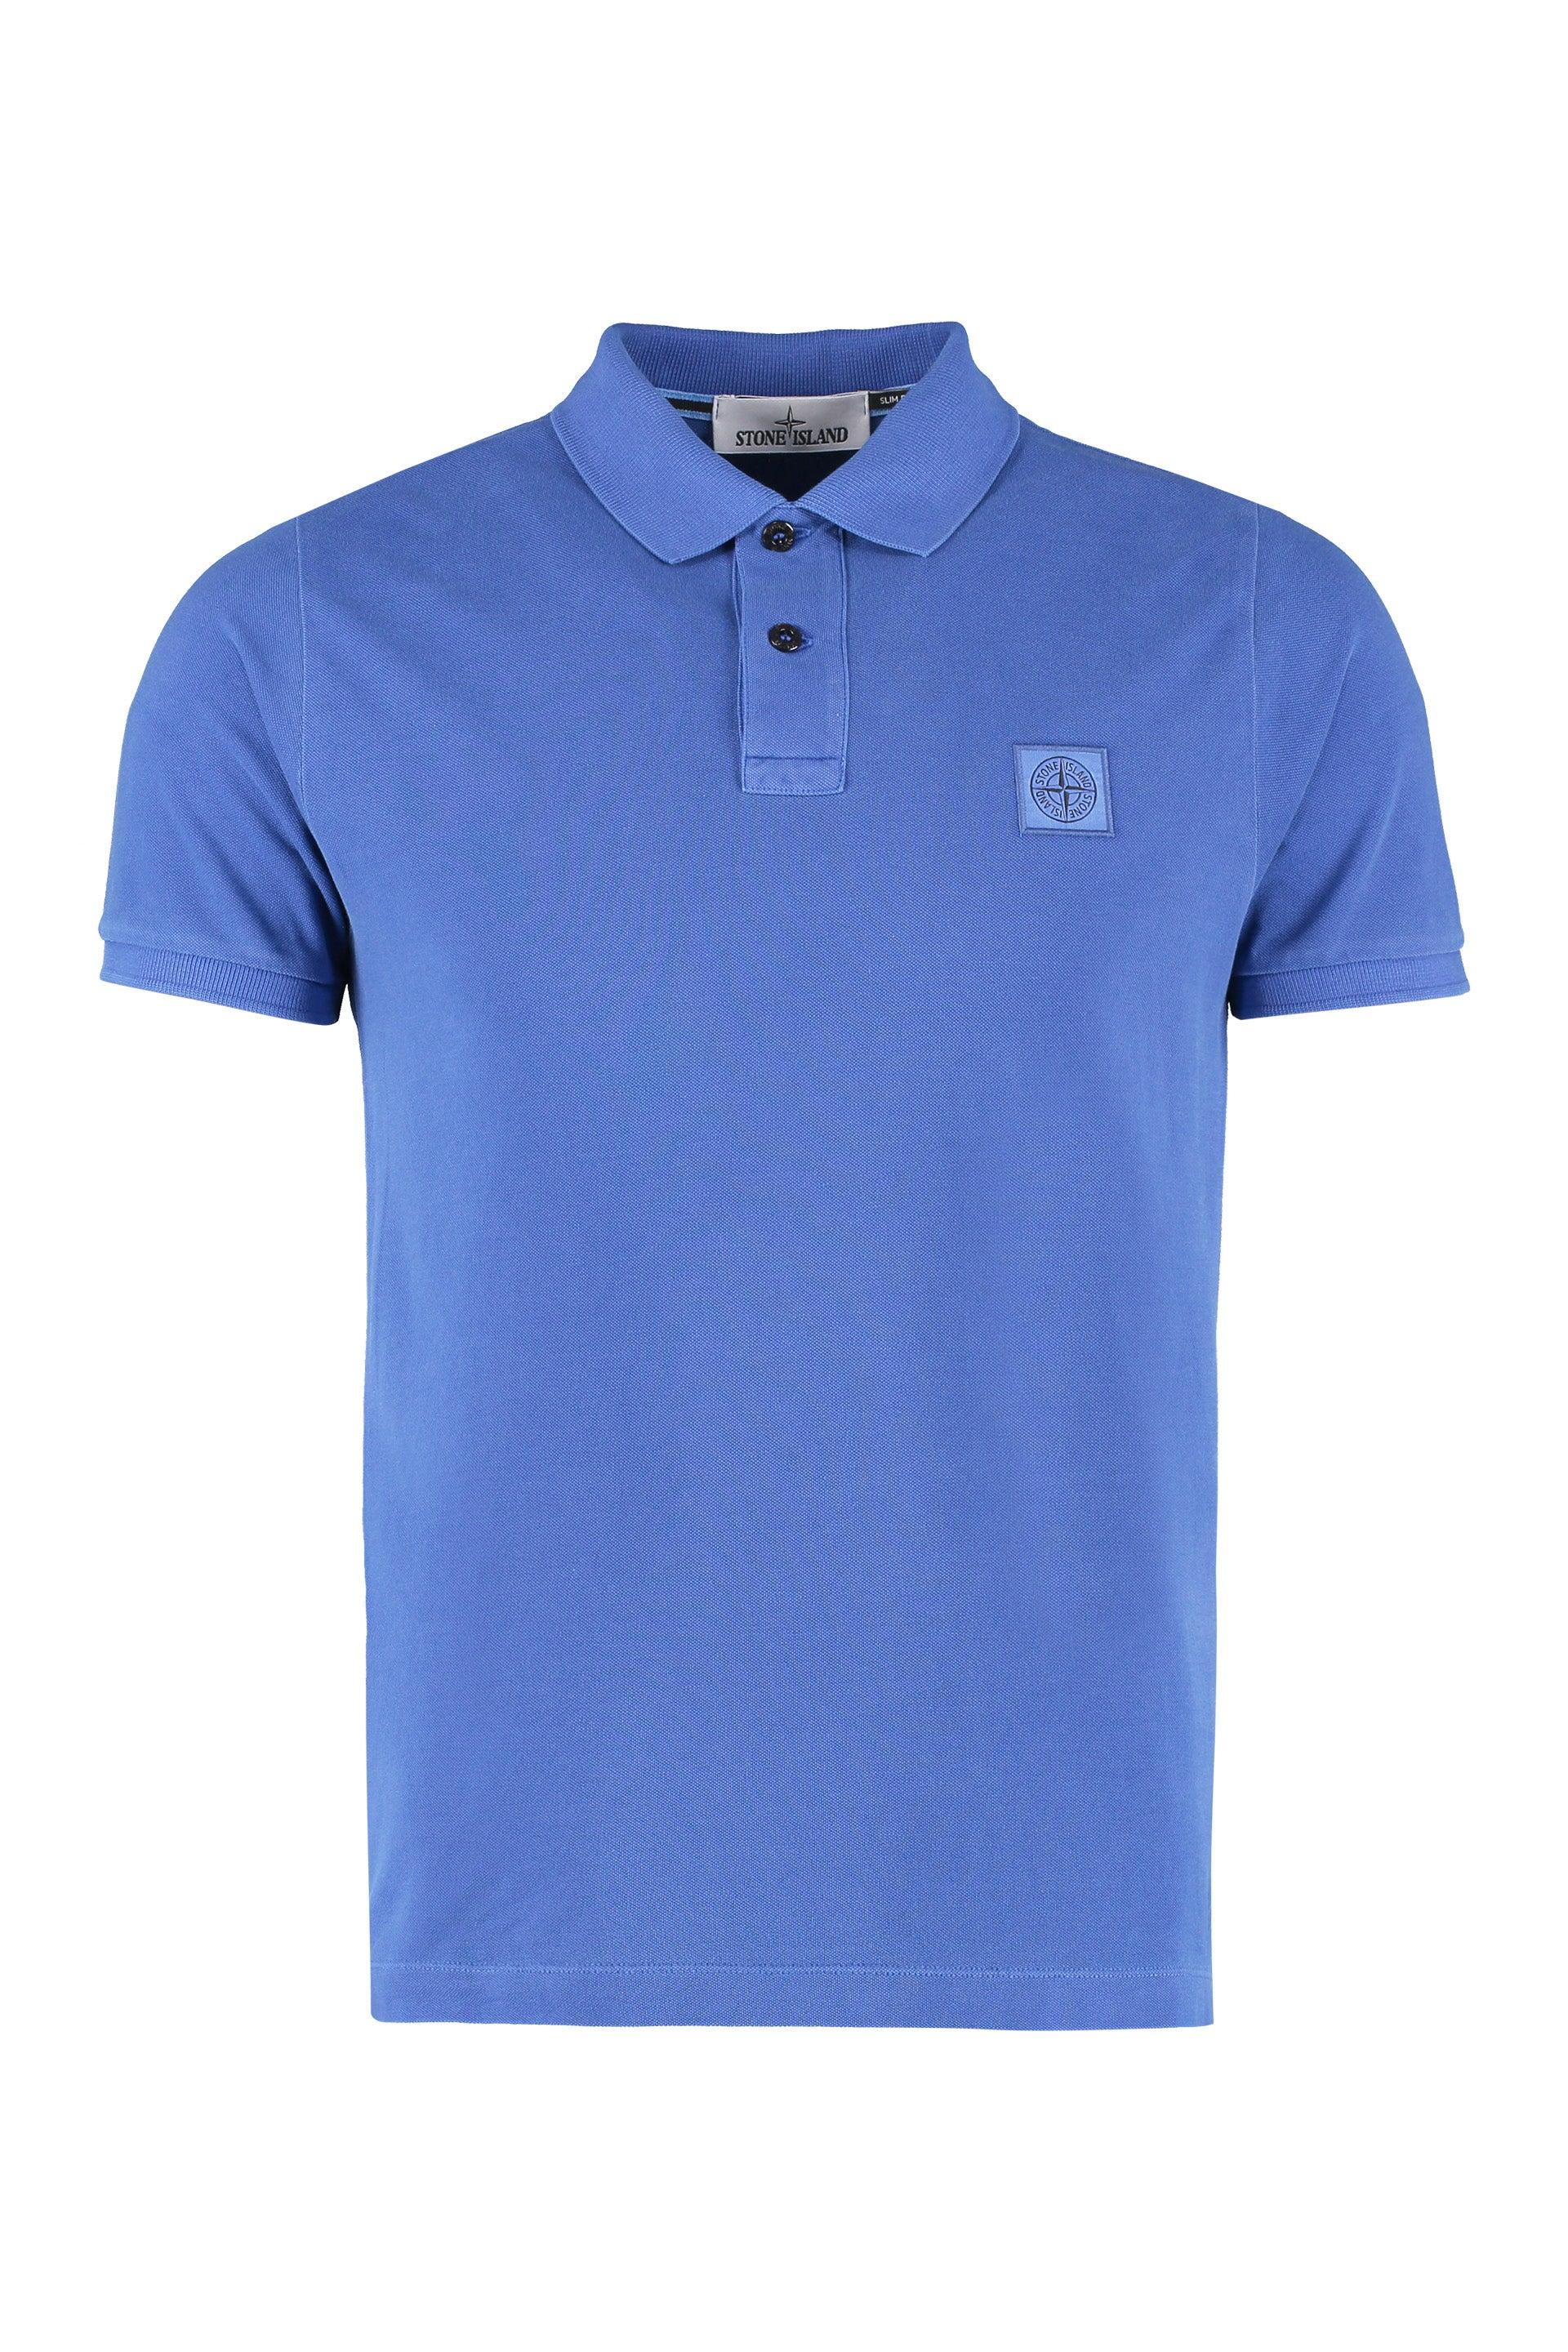 Stone Island Cotton-piqué Polo Shirt in Blue for Men | Lyst